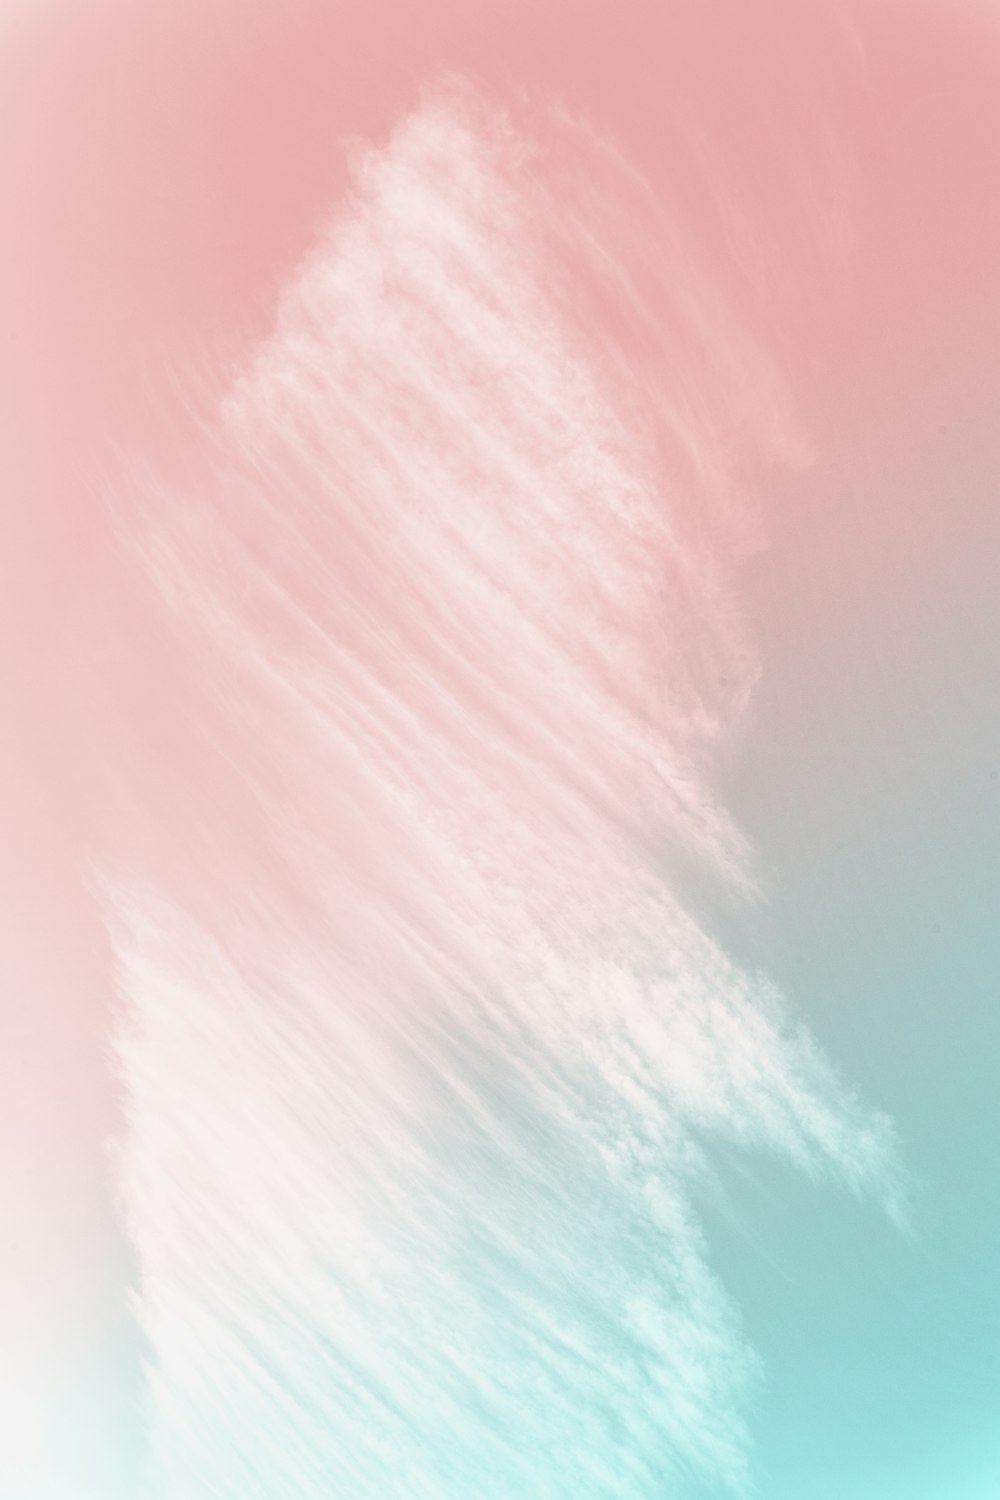 Pastel Wallpapers: Free HD Download [500+ HQ] | Unsplash